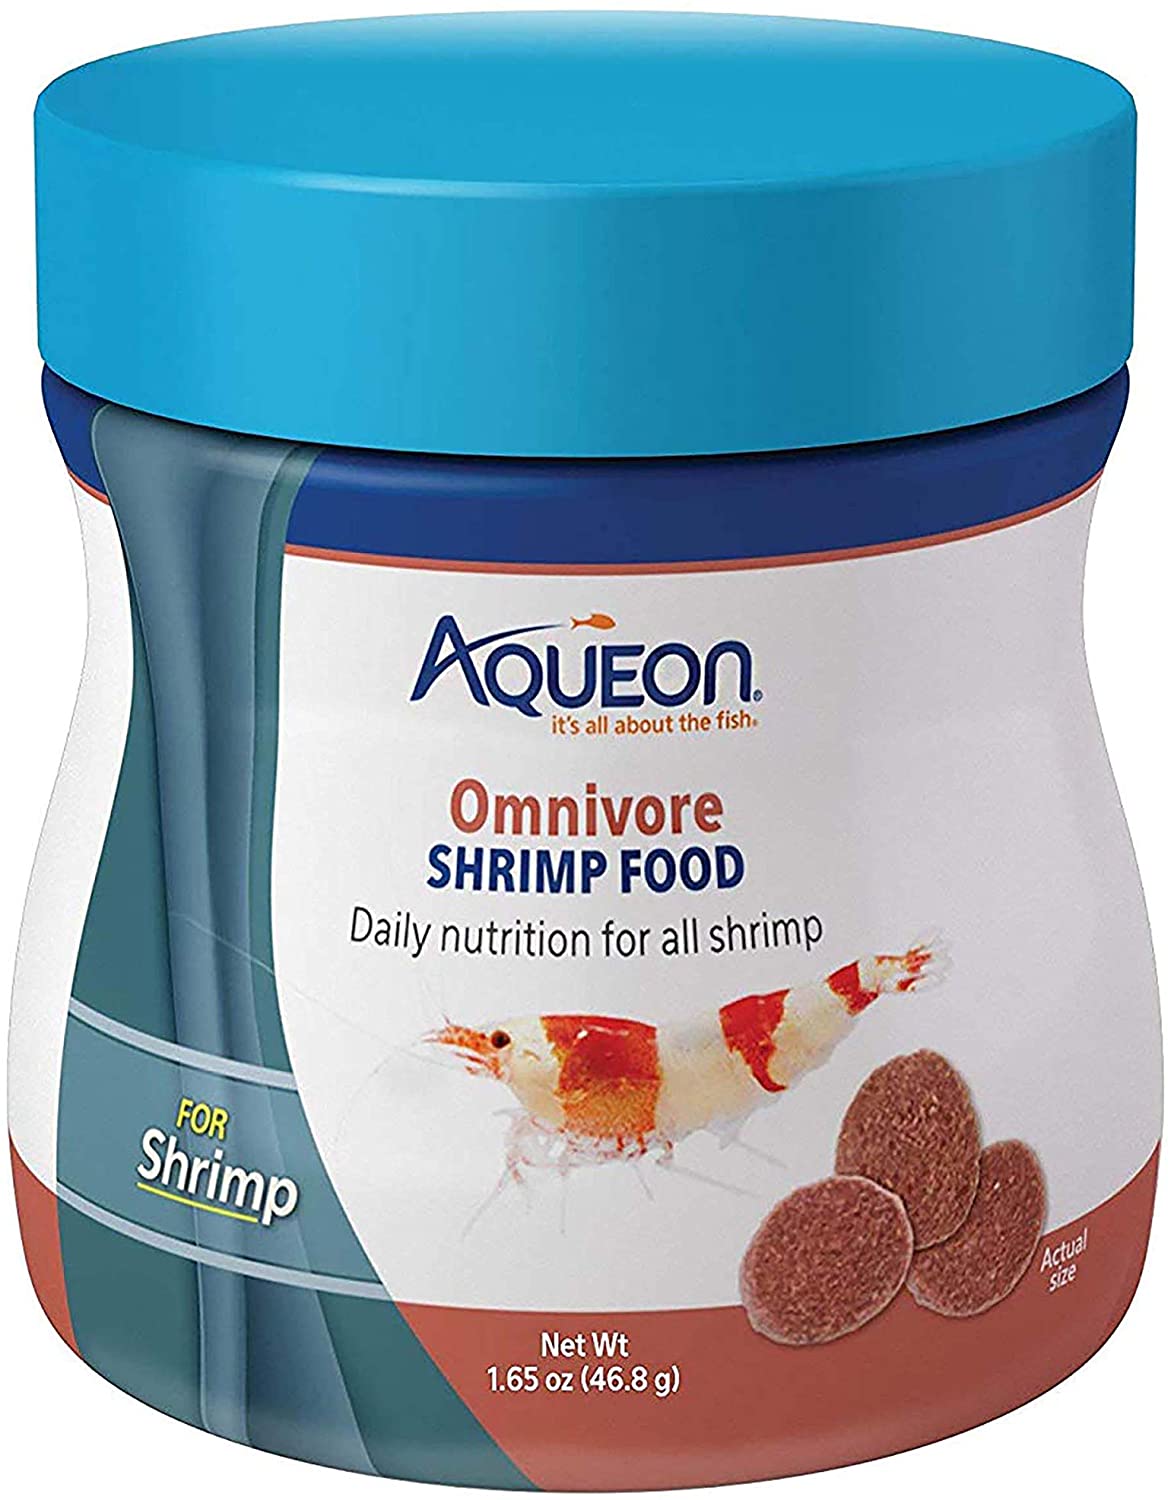 Aqueon Shrimp Omnivore Food